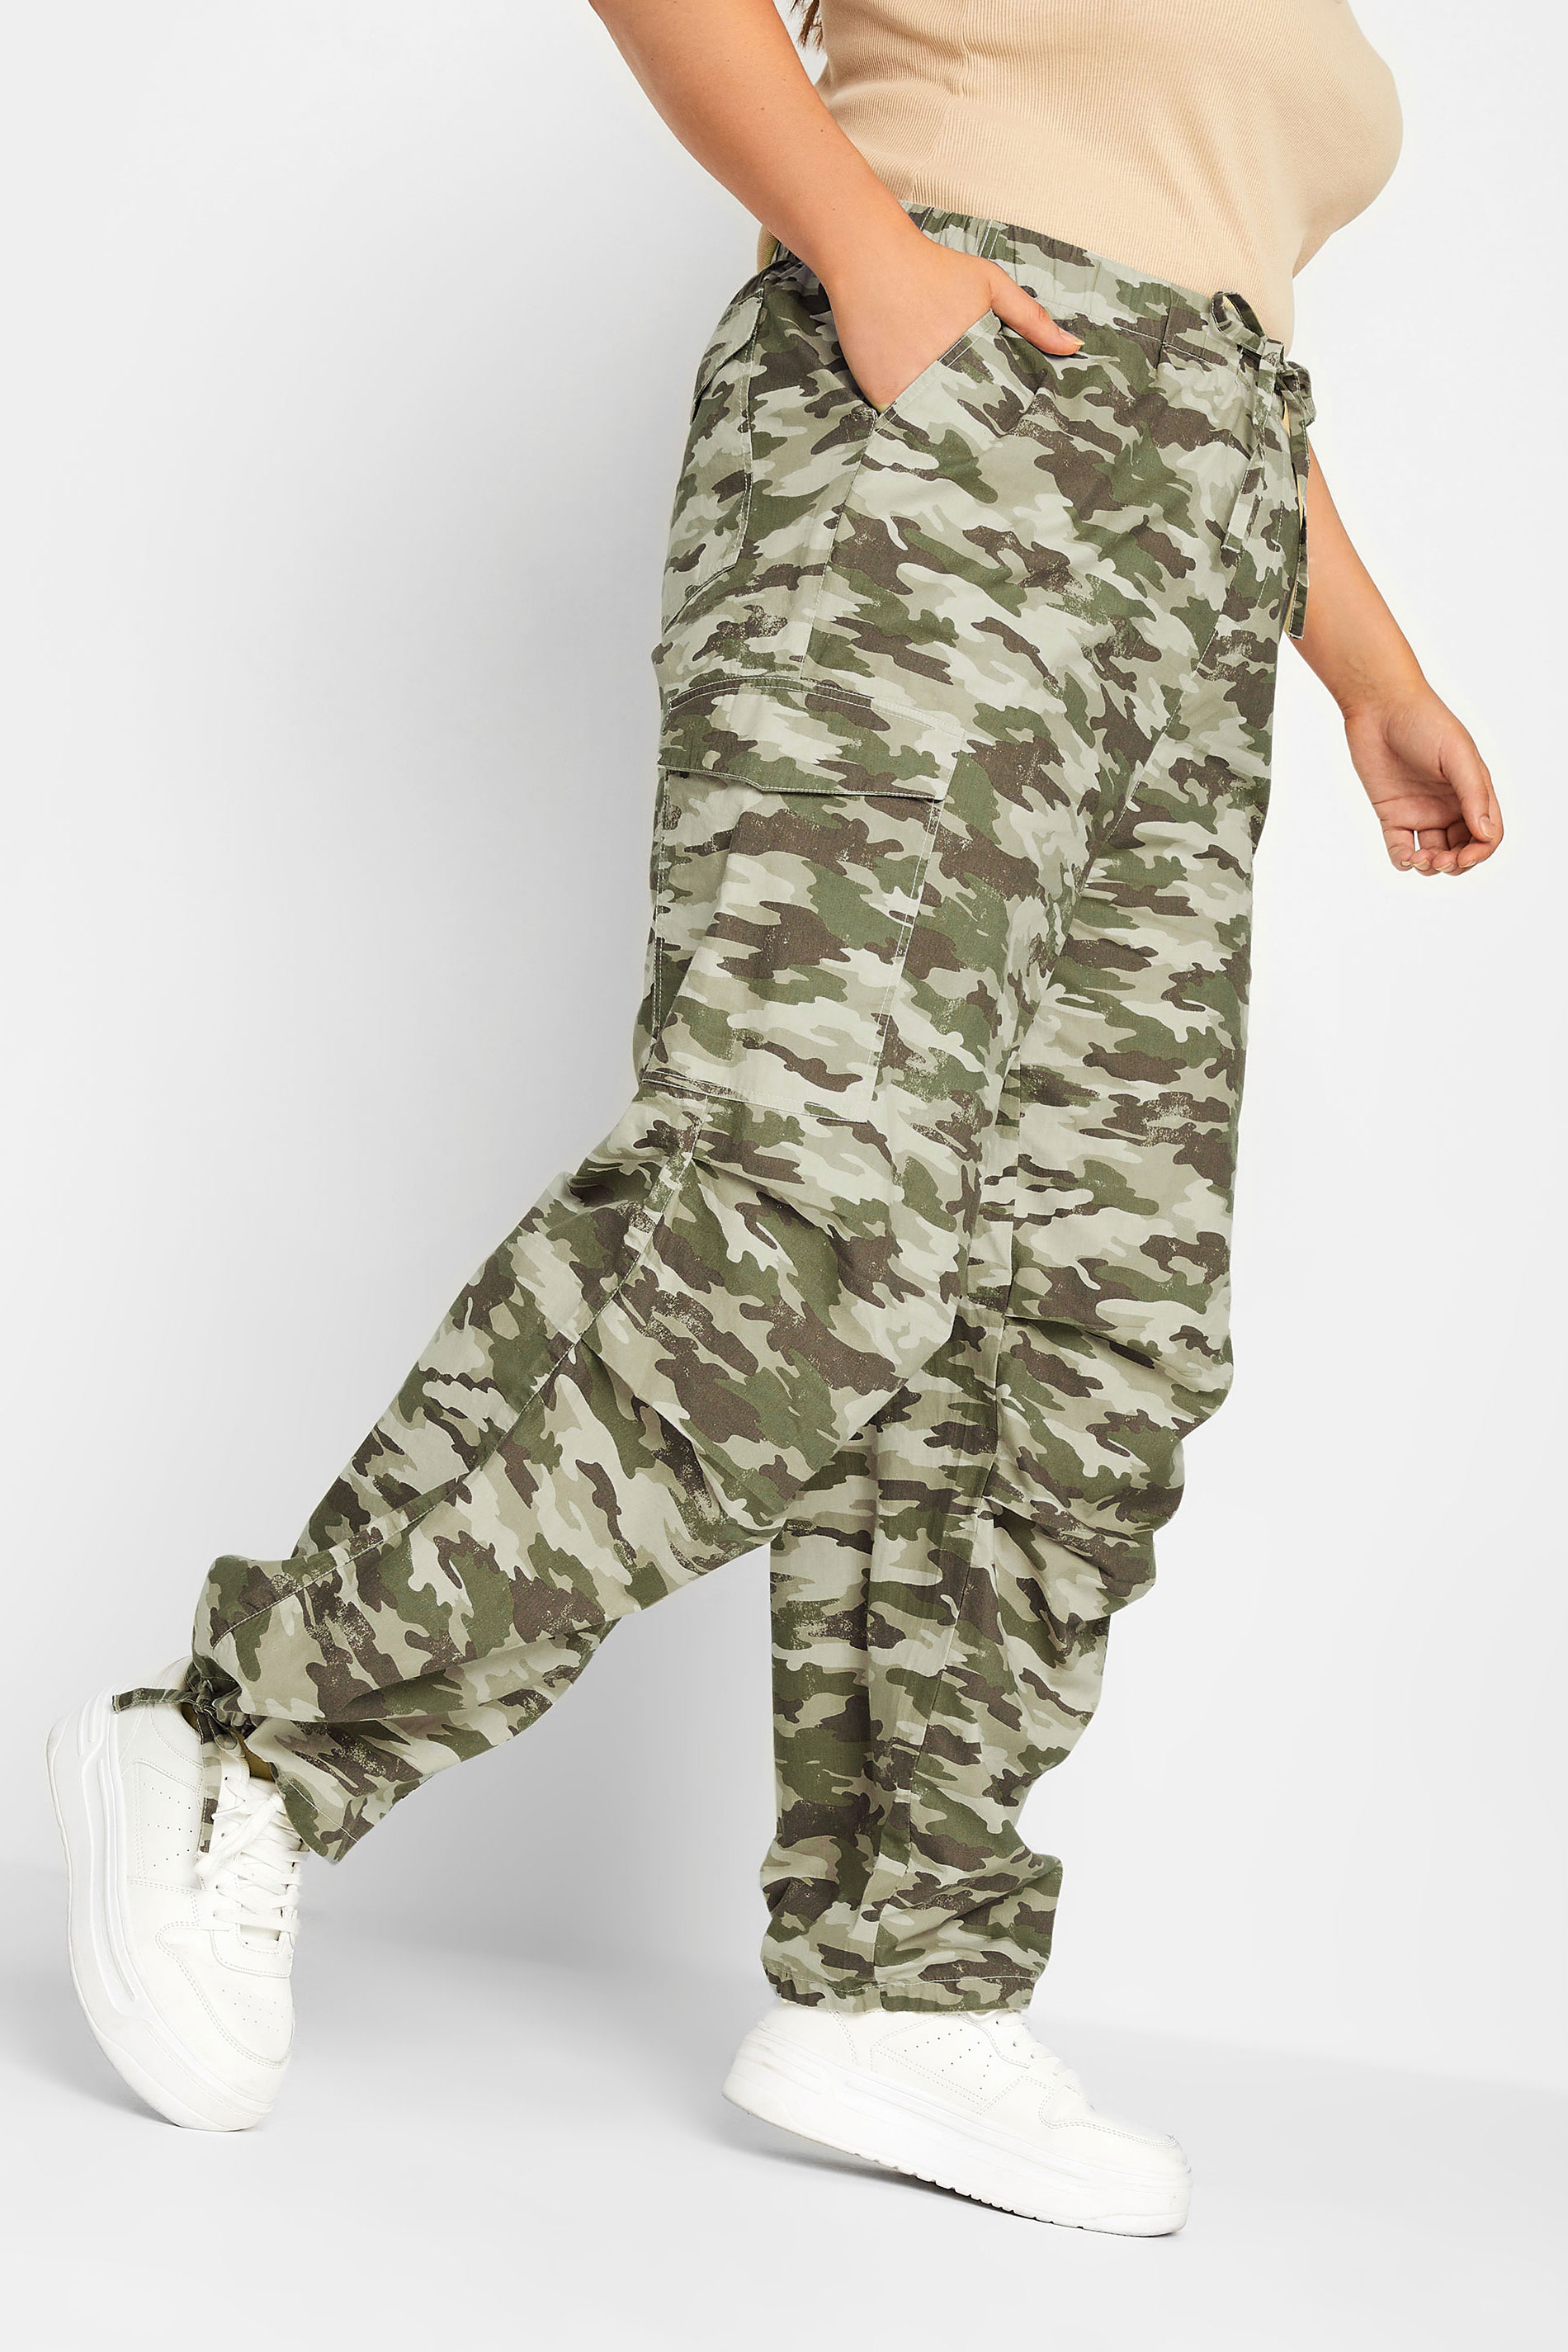 Women's Mid-Rise Parachute Pants - Wild Fable Olive Green Camo XXS | eBay